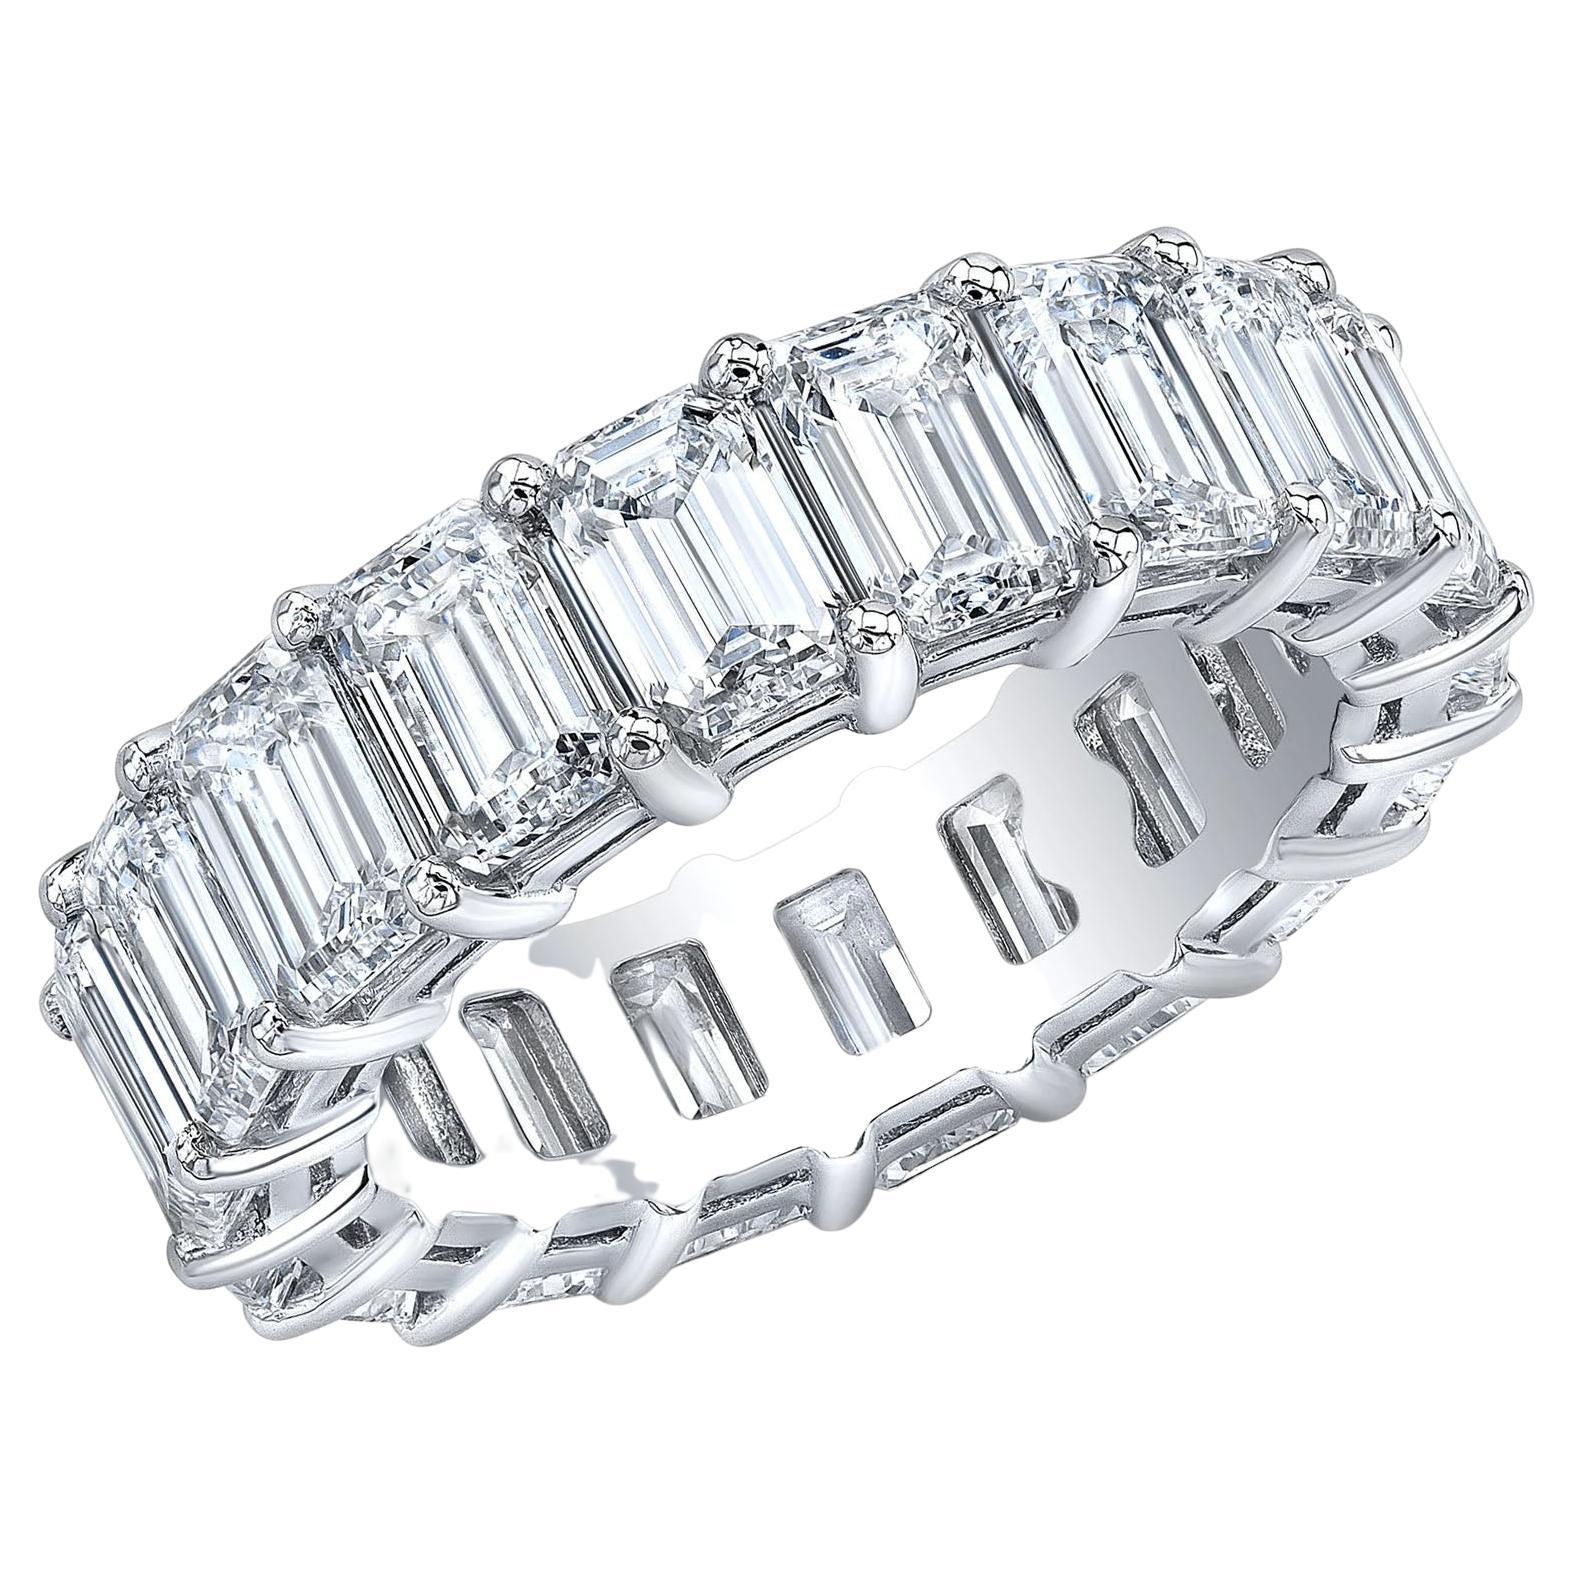 For Sale:  10.5 Carat Emerald Cut Eternity Ring H Color VS1 Clarity Platinum